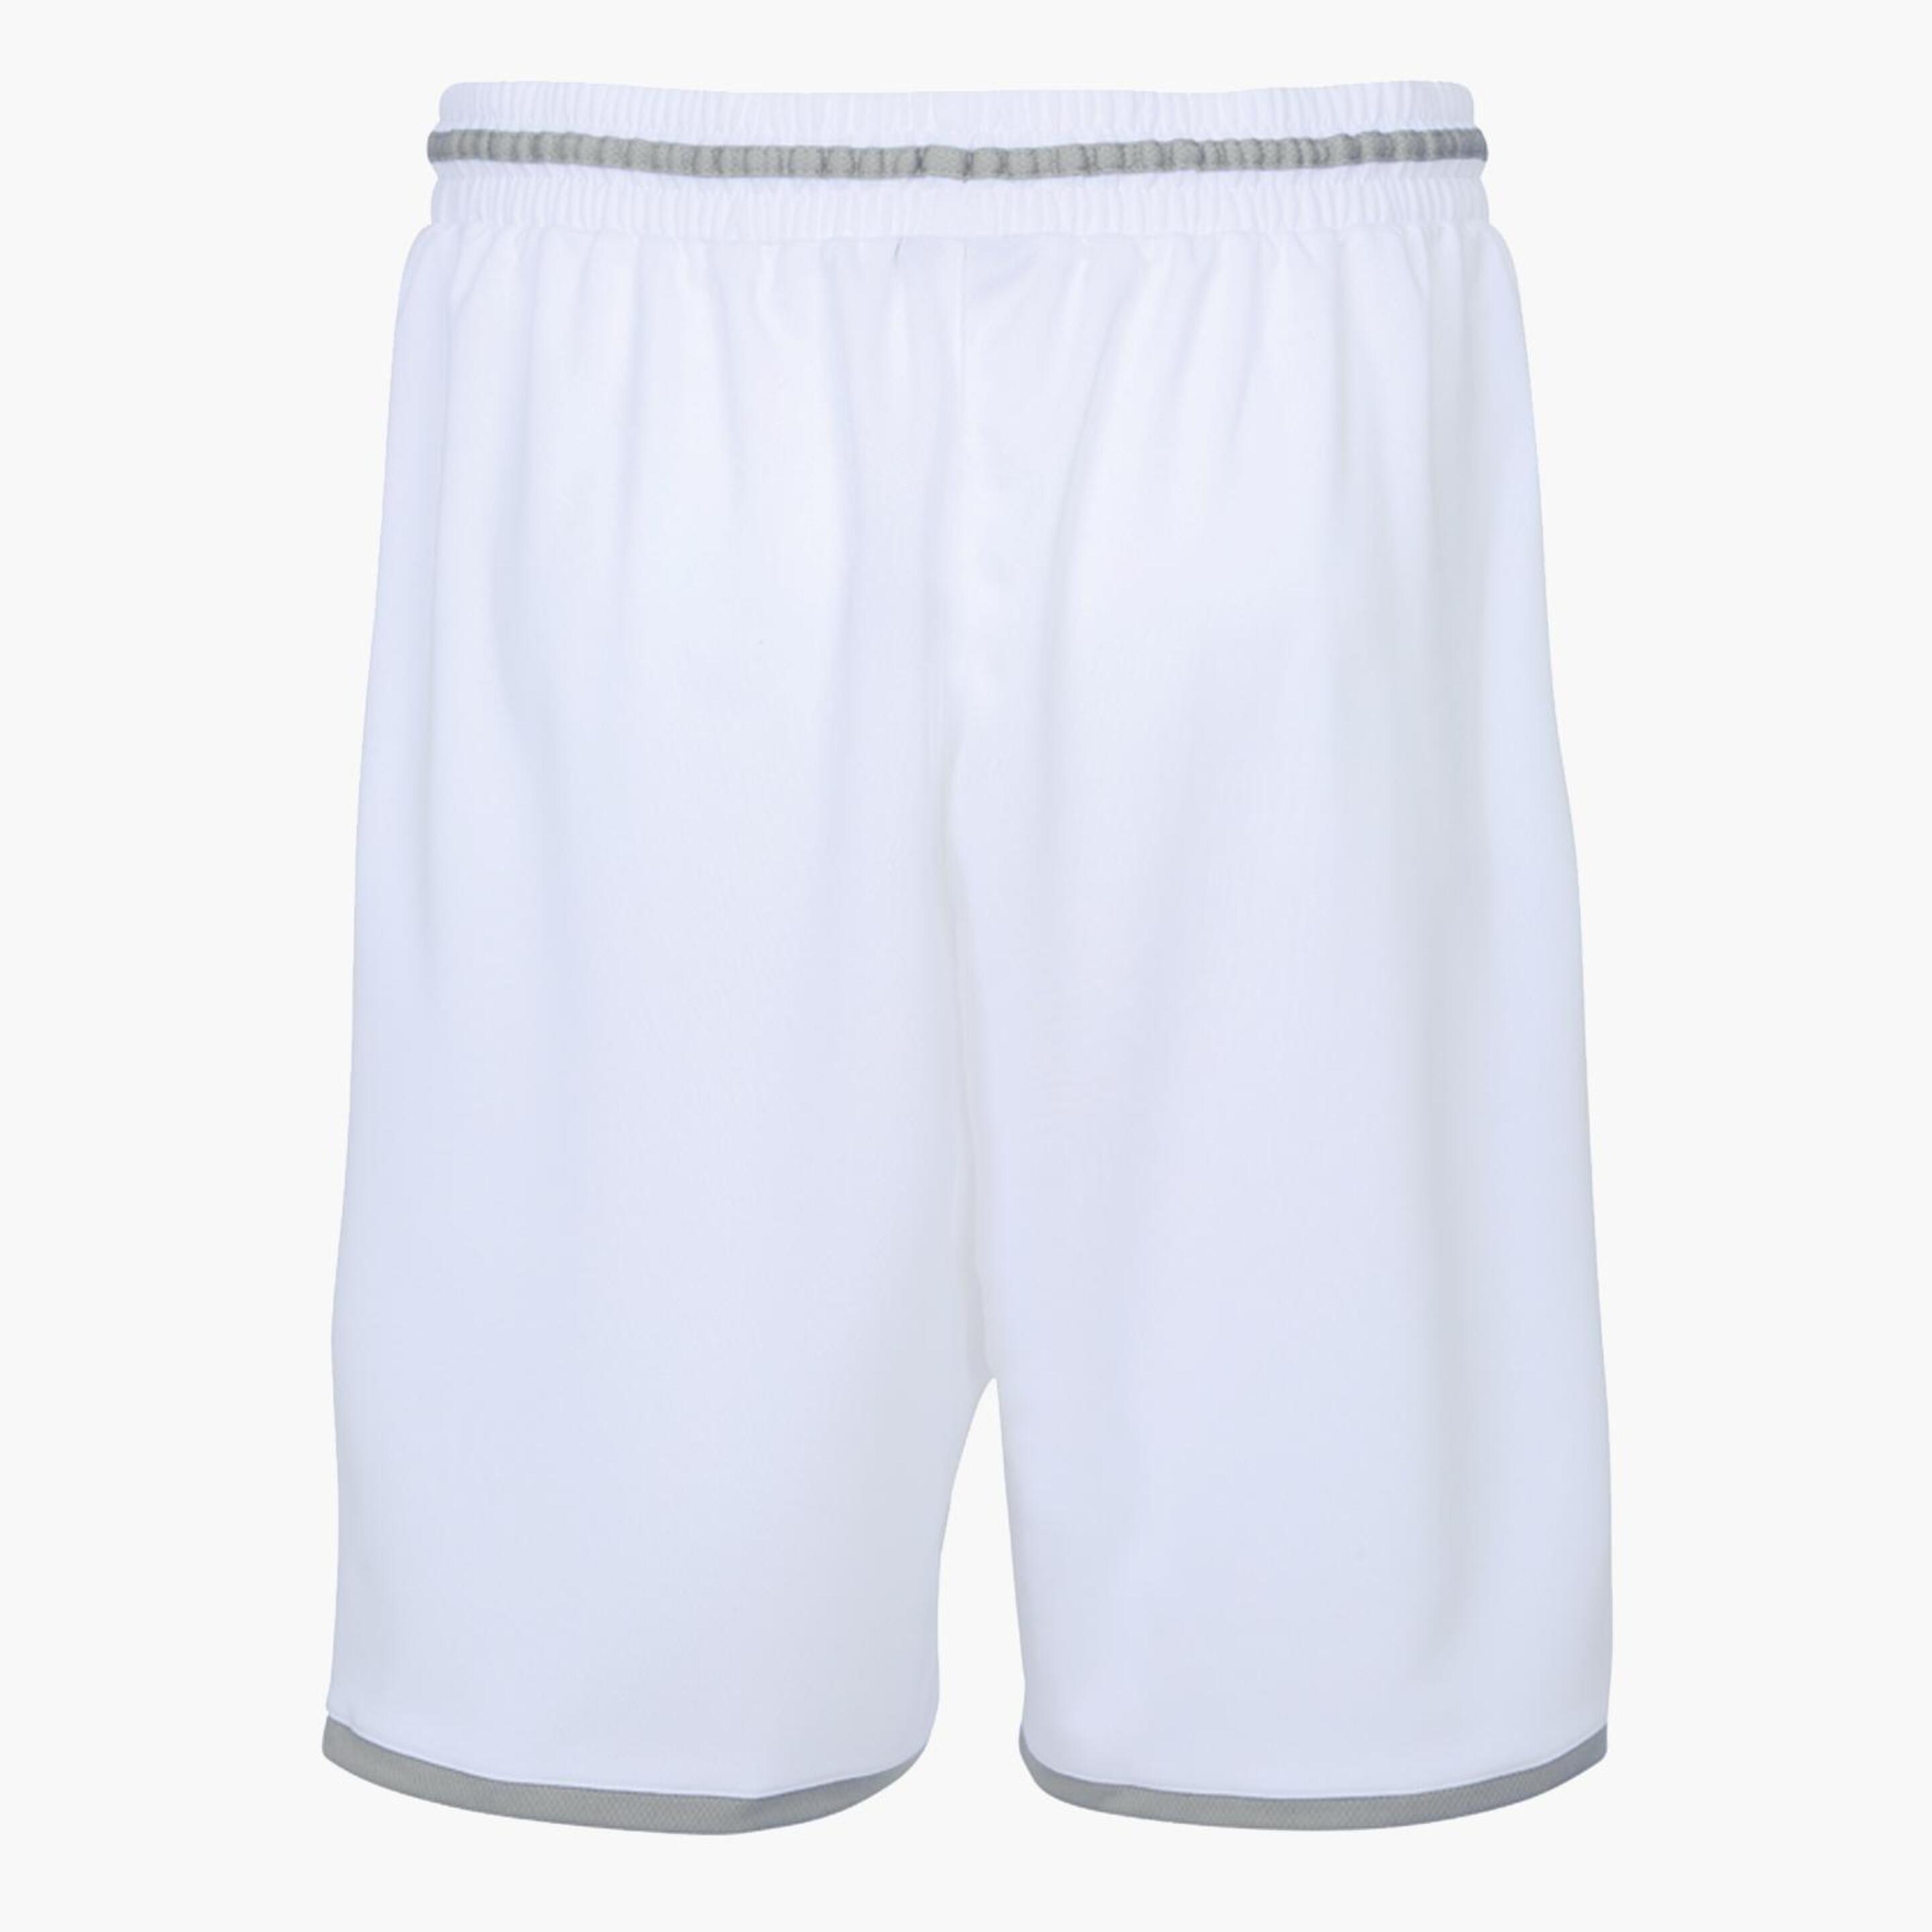 Move Shorts Blanco/plata Spalding